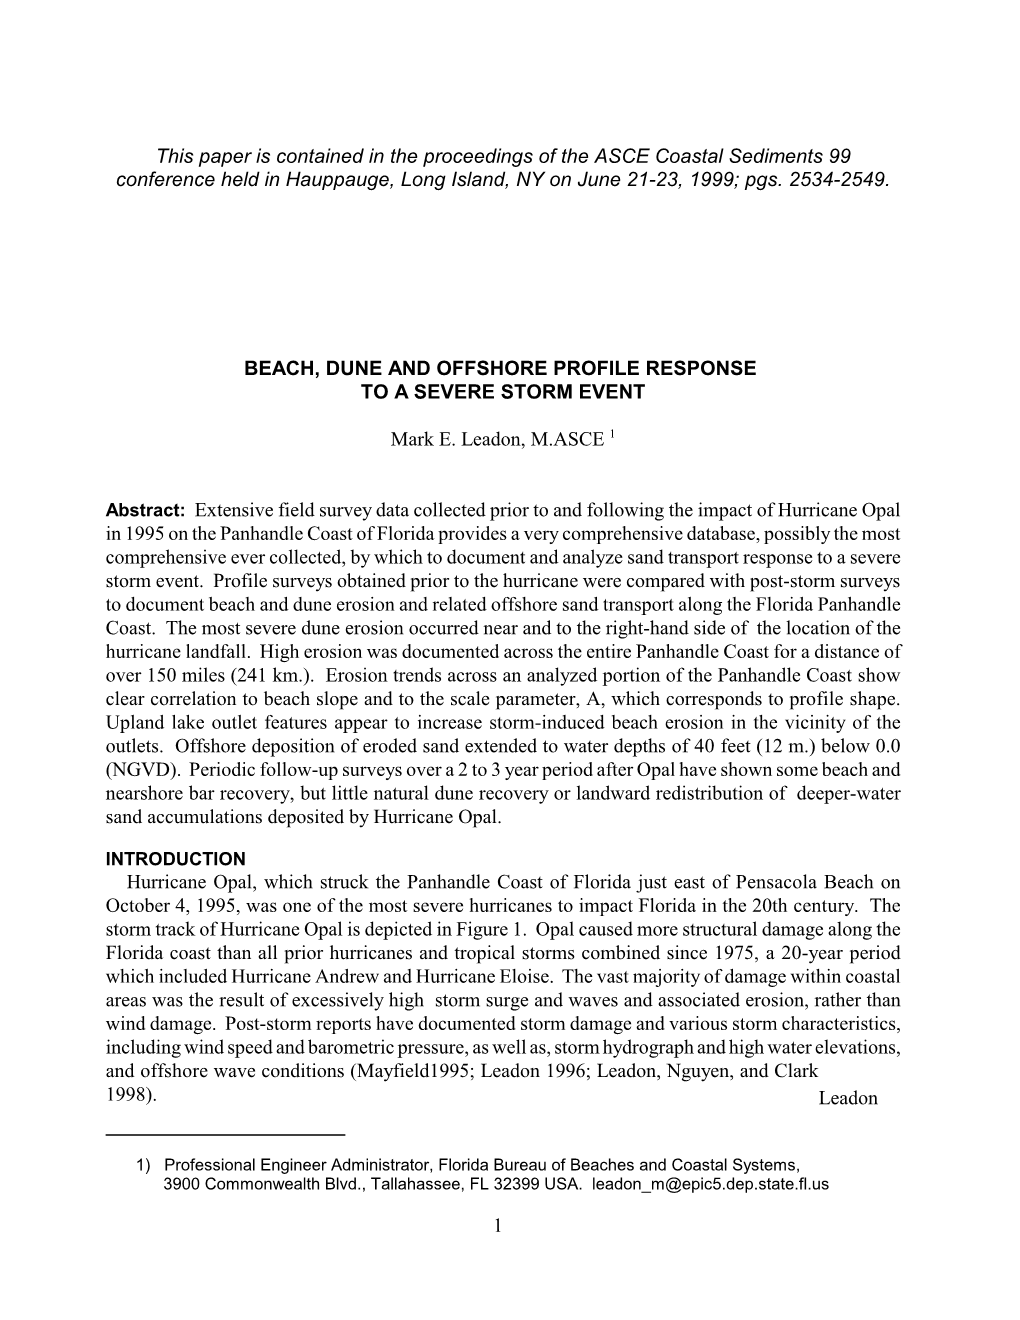 Hurricane Opal Analysis Paper